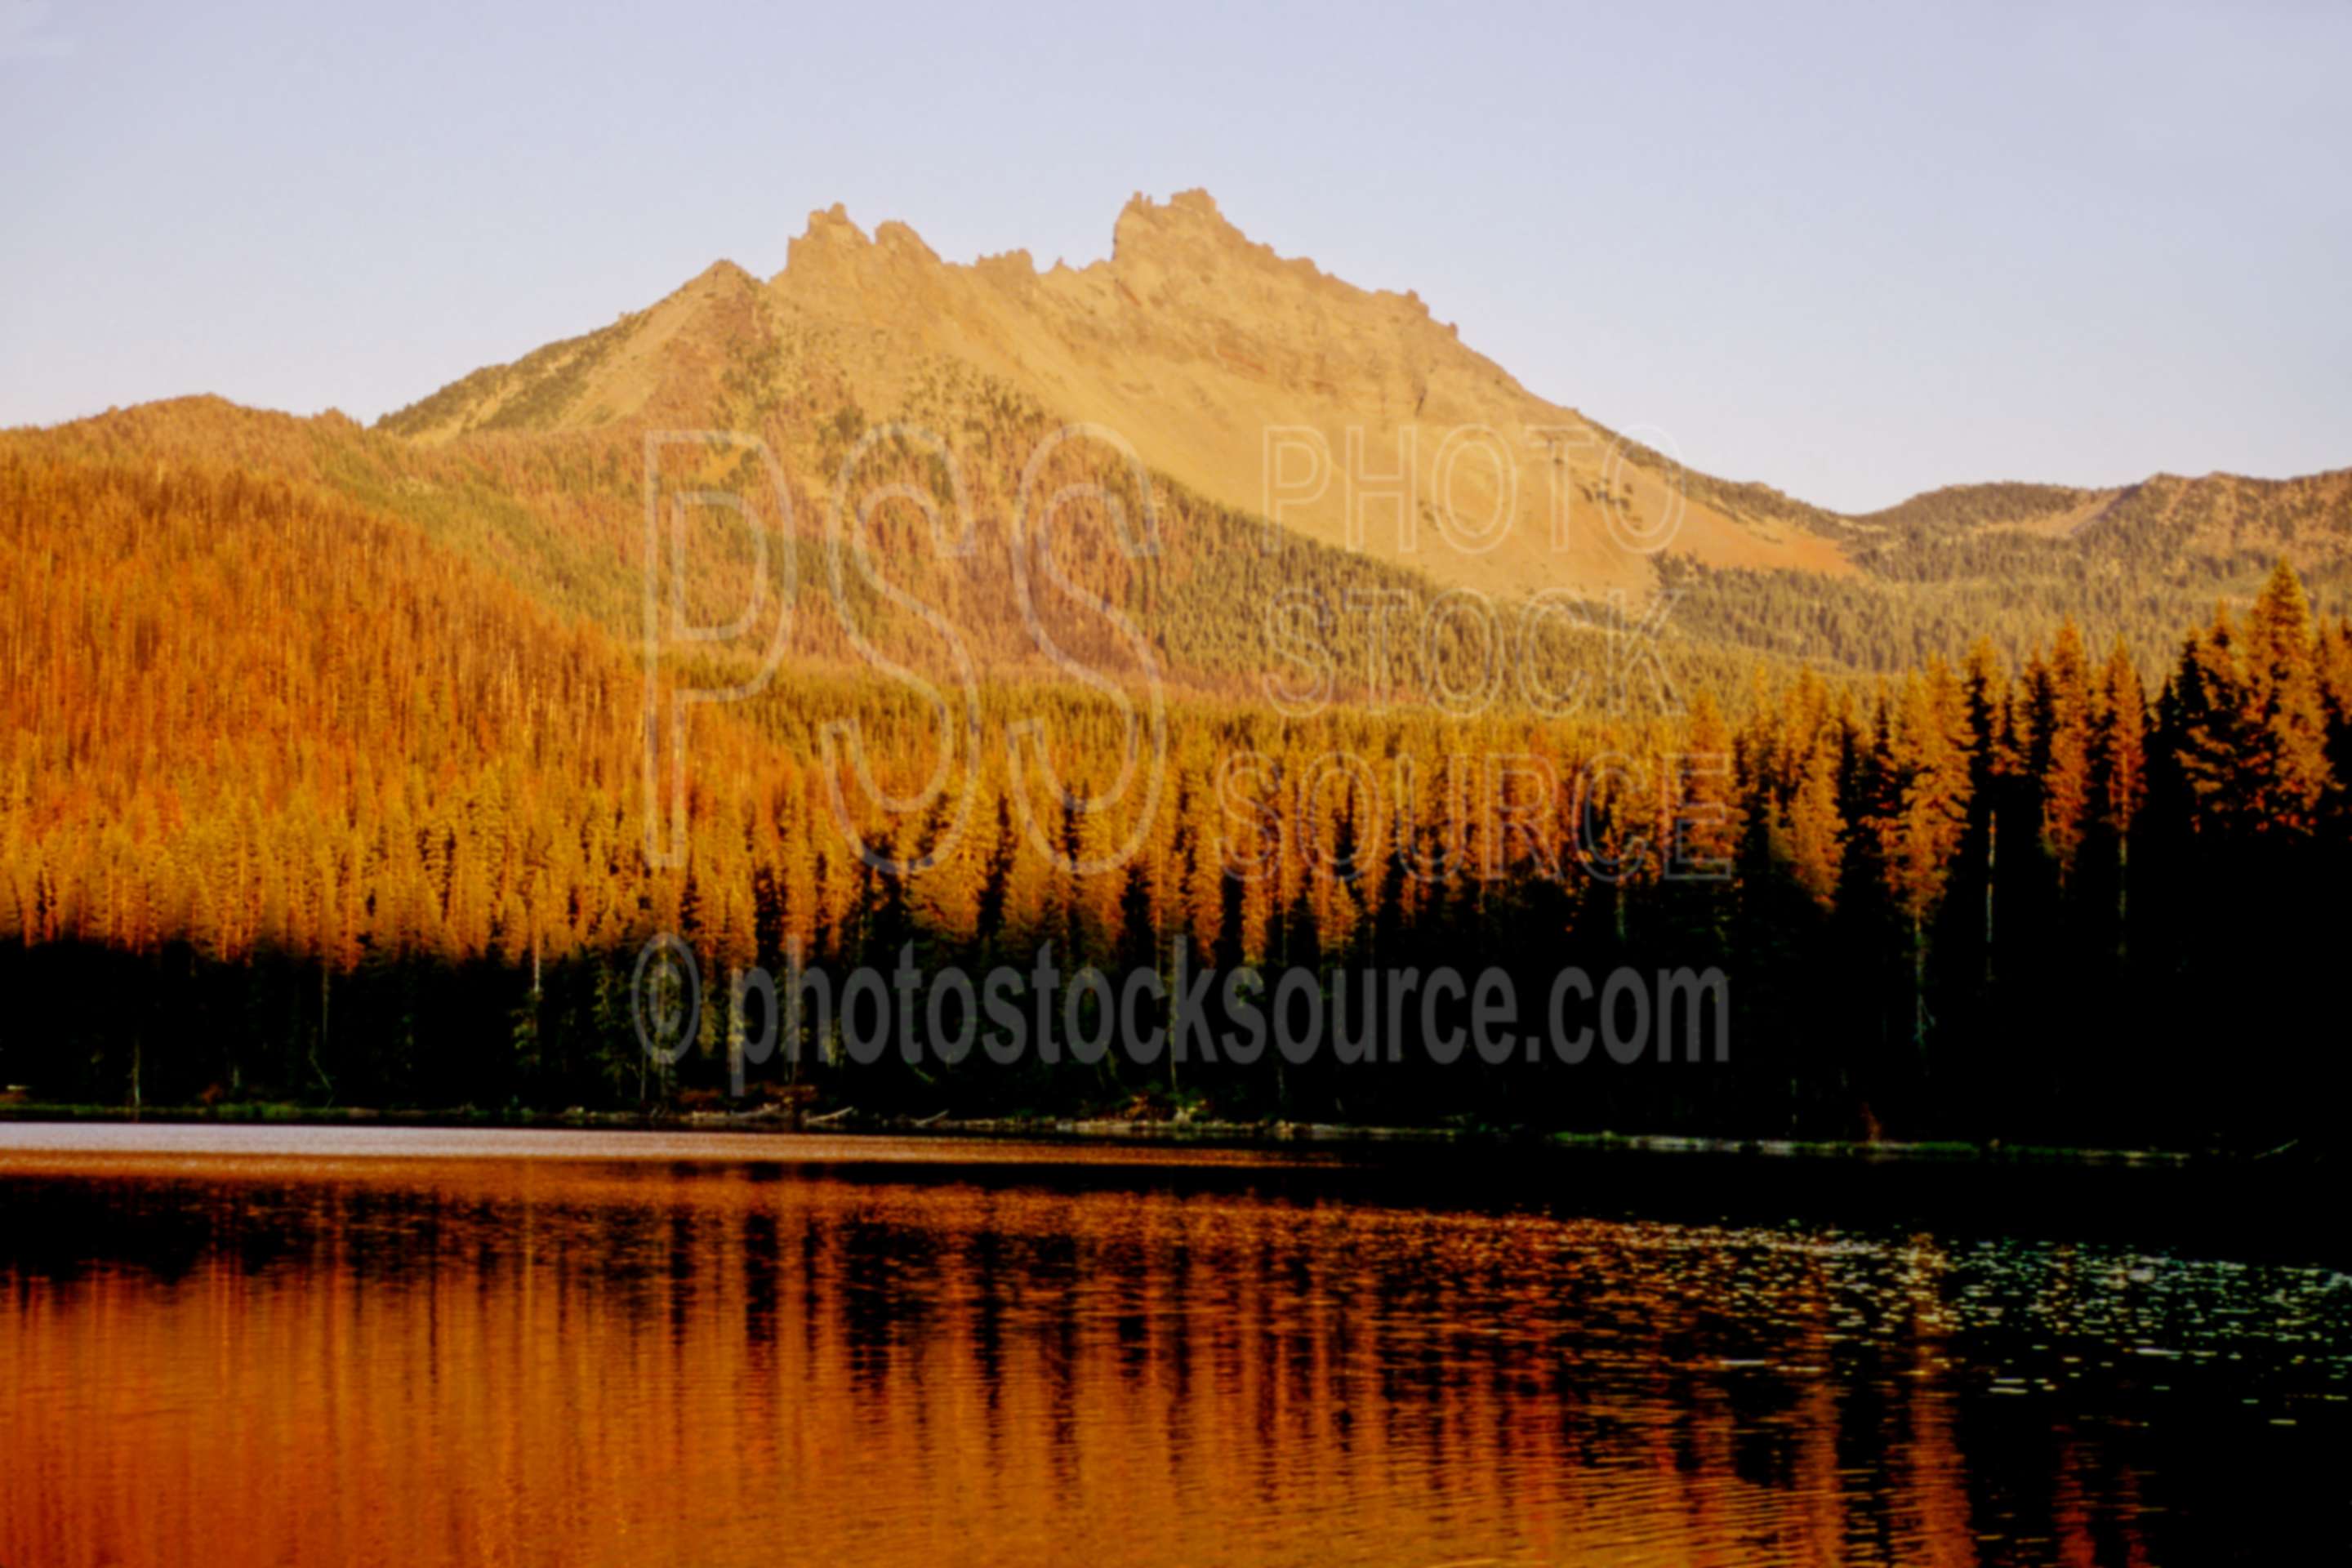 Three Fingered Jack,duffy lake,sunset,lake,usas,lakes rivers,mountains